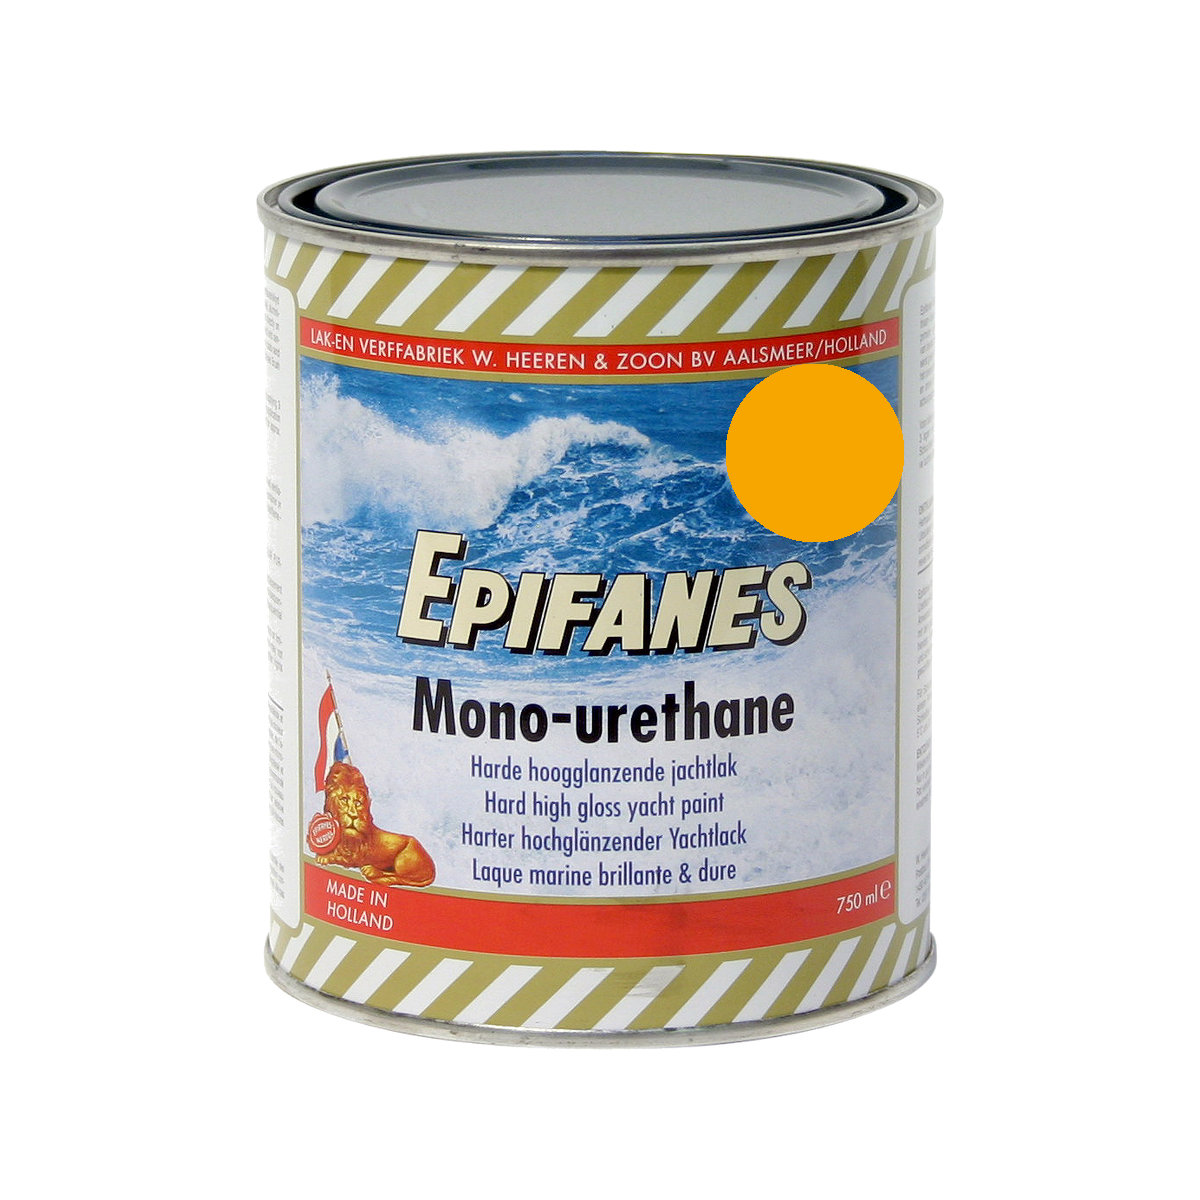 Epifanes mono-urethane jachtlak - geel 3137, 750ml